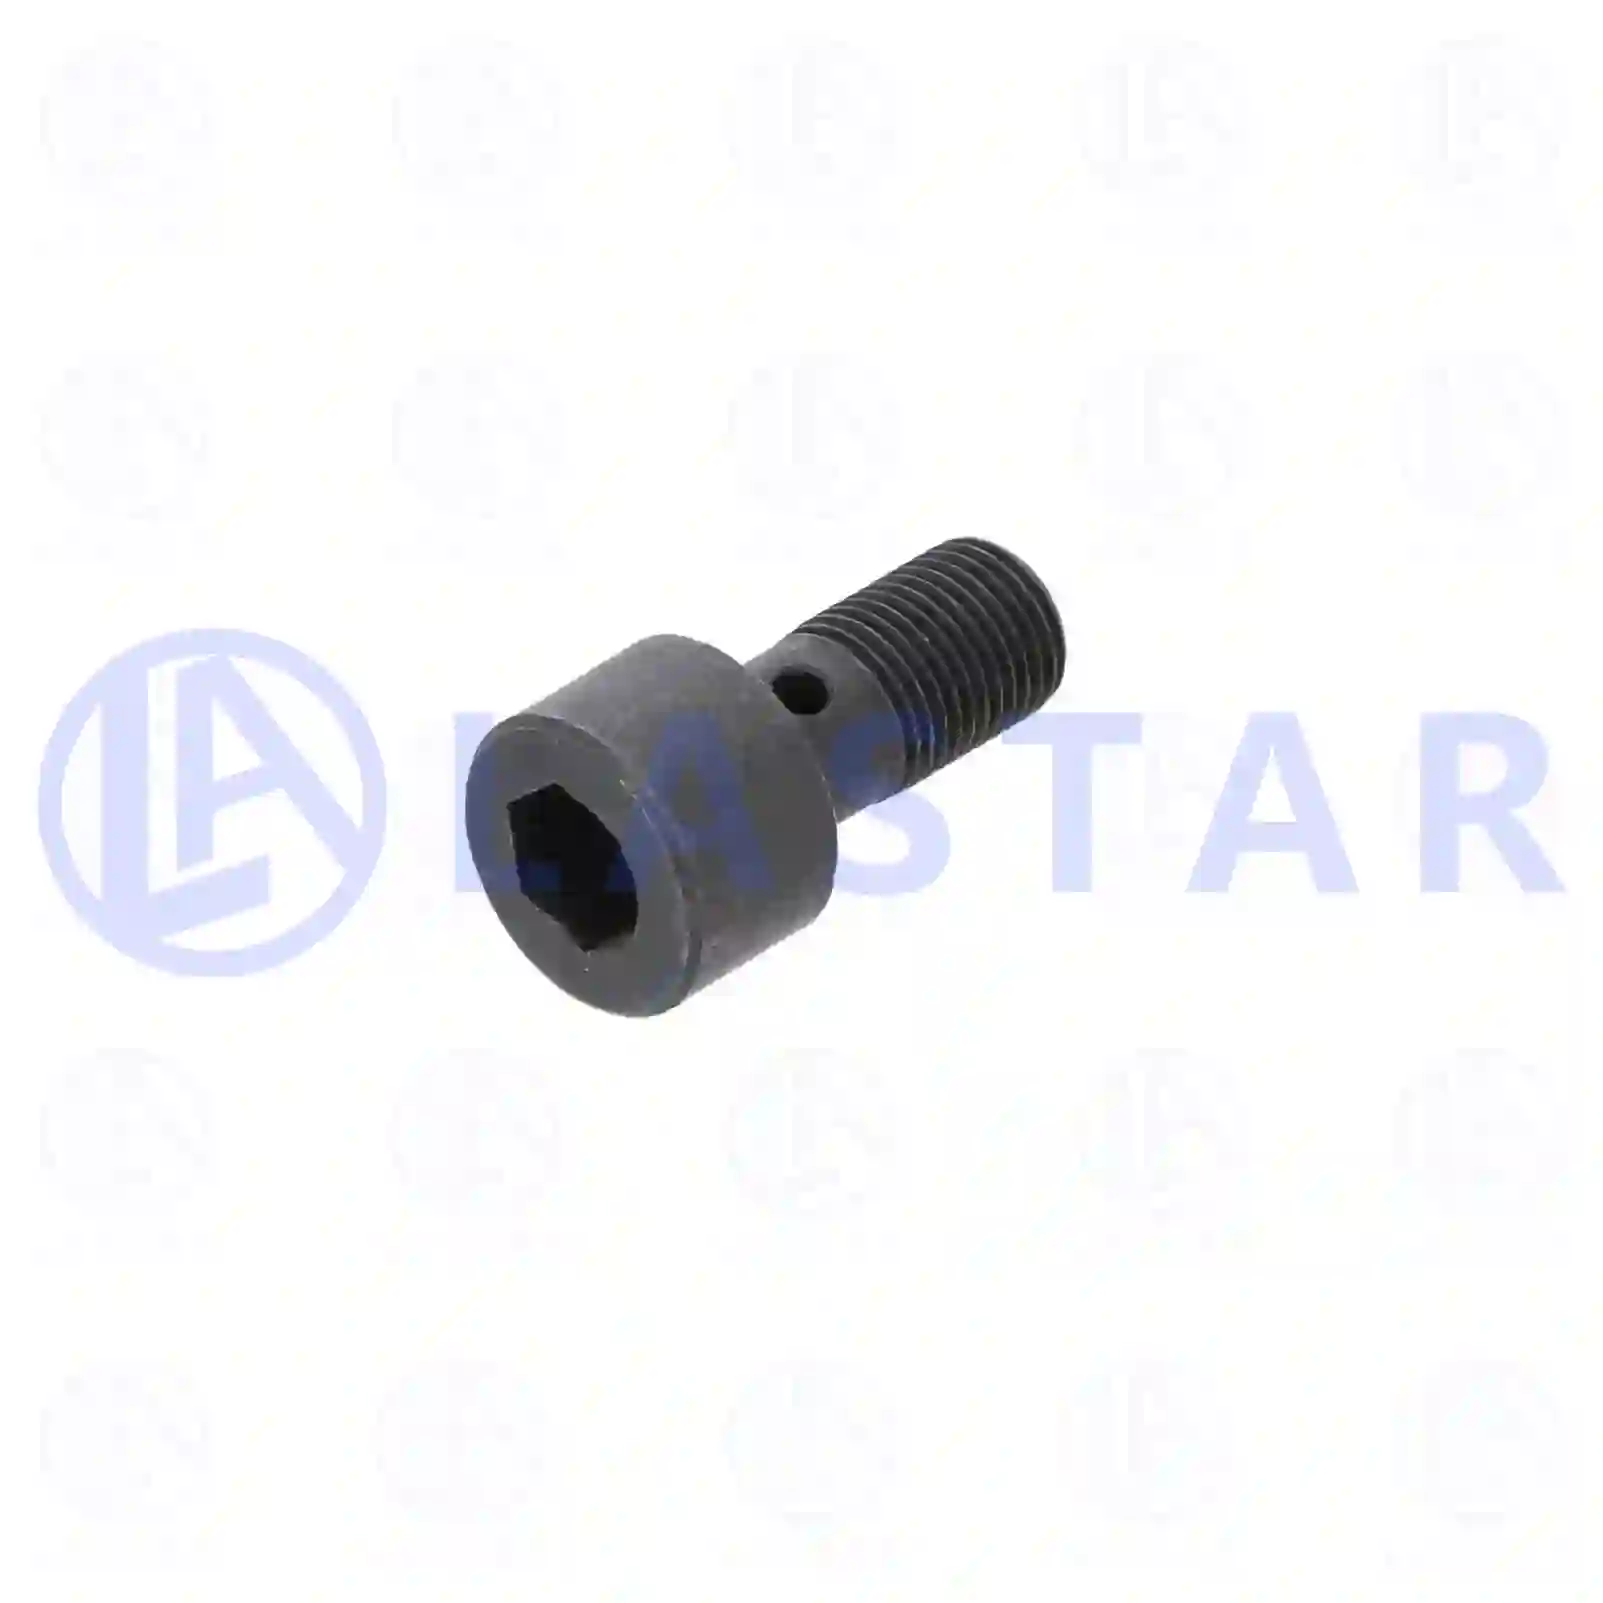 Oil Pump Hollow screw, la no: 77704595 ,  oem no:1525387 Lastar Spare Part | Truck Spare Parts, Auotomotive Spare Parts